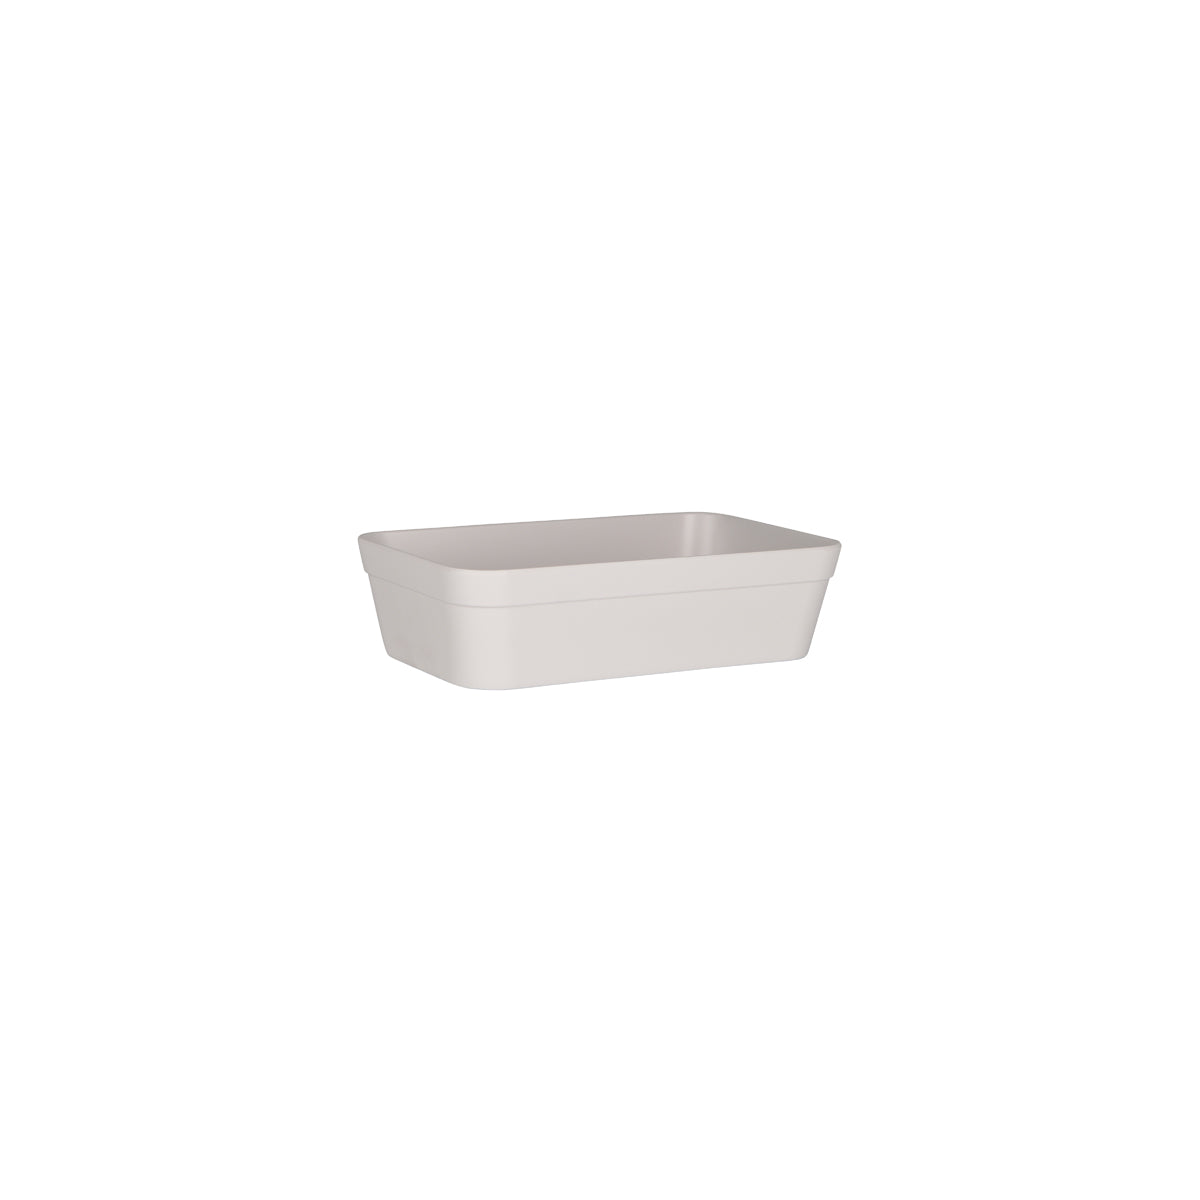 46390 Zicco Zicco Bento Box White Insert Bowl Solid Large Tomkin Australia Hospitality Supplies